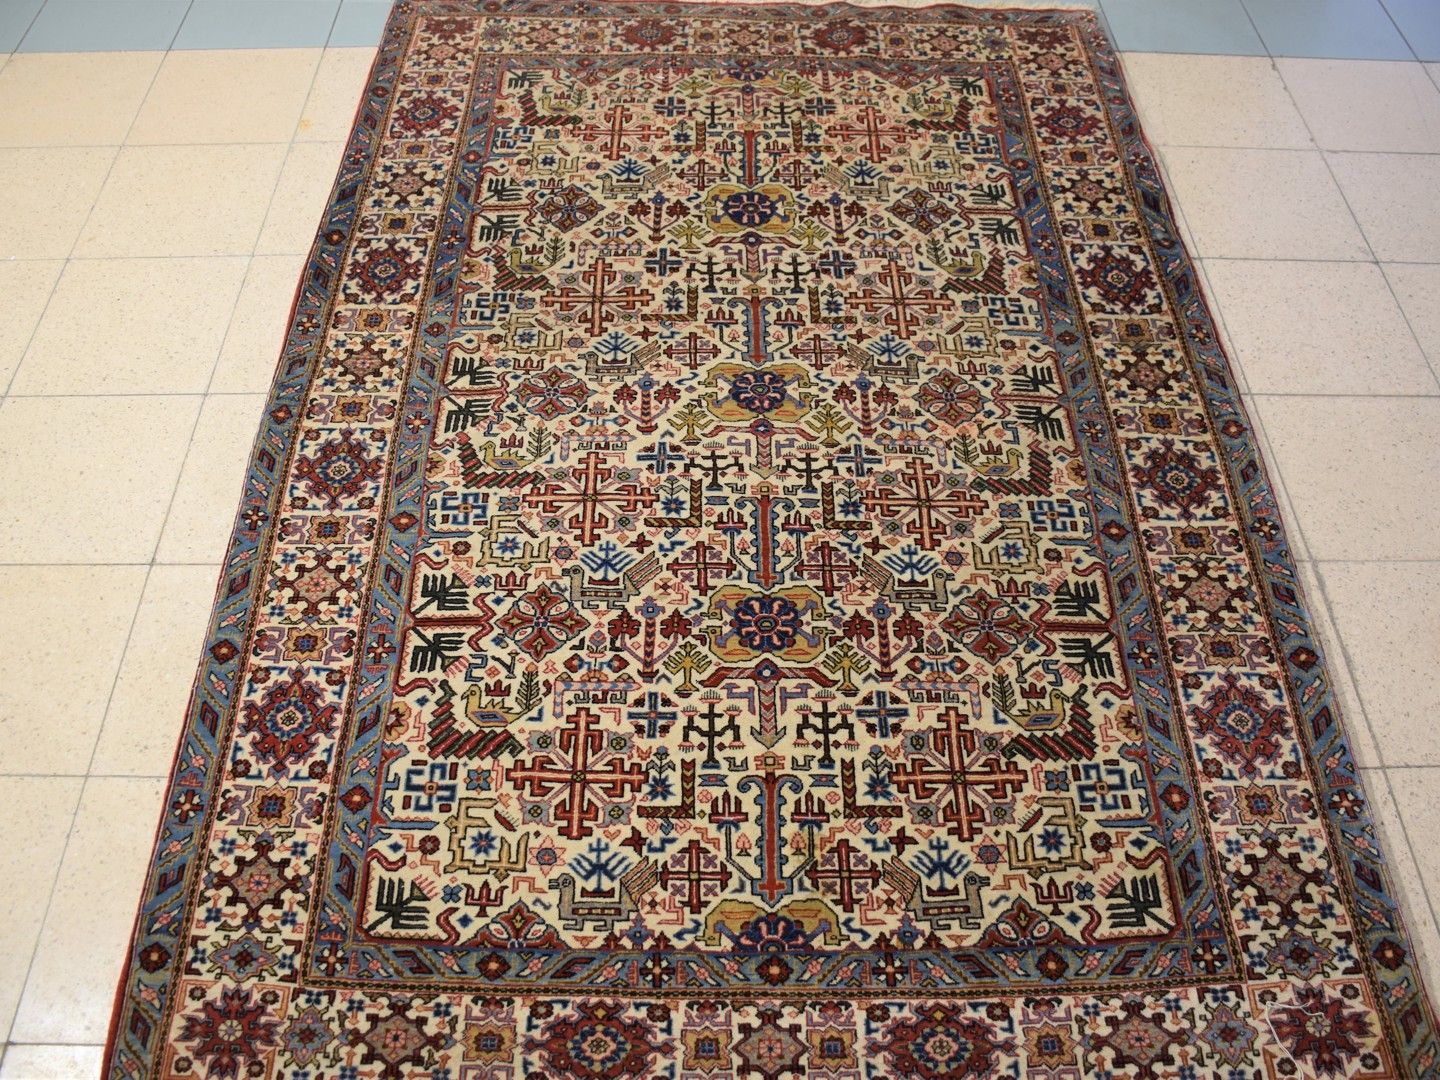 Null Iranian carpet 207 x 139 cm.